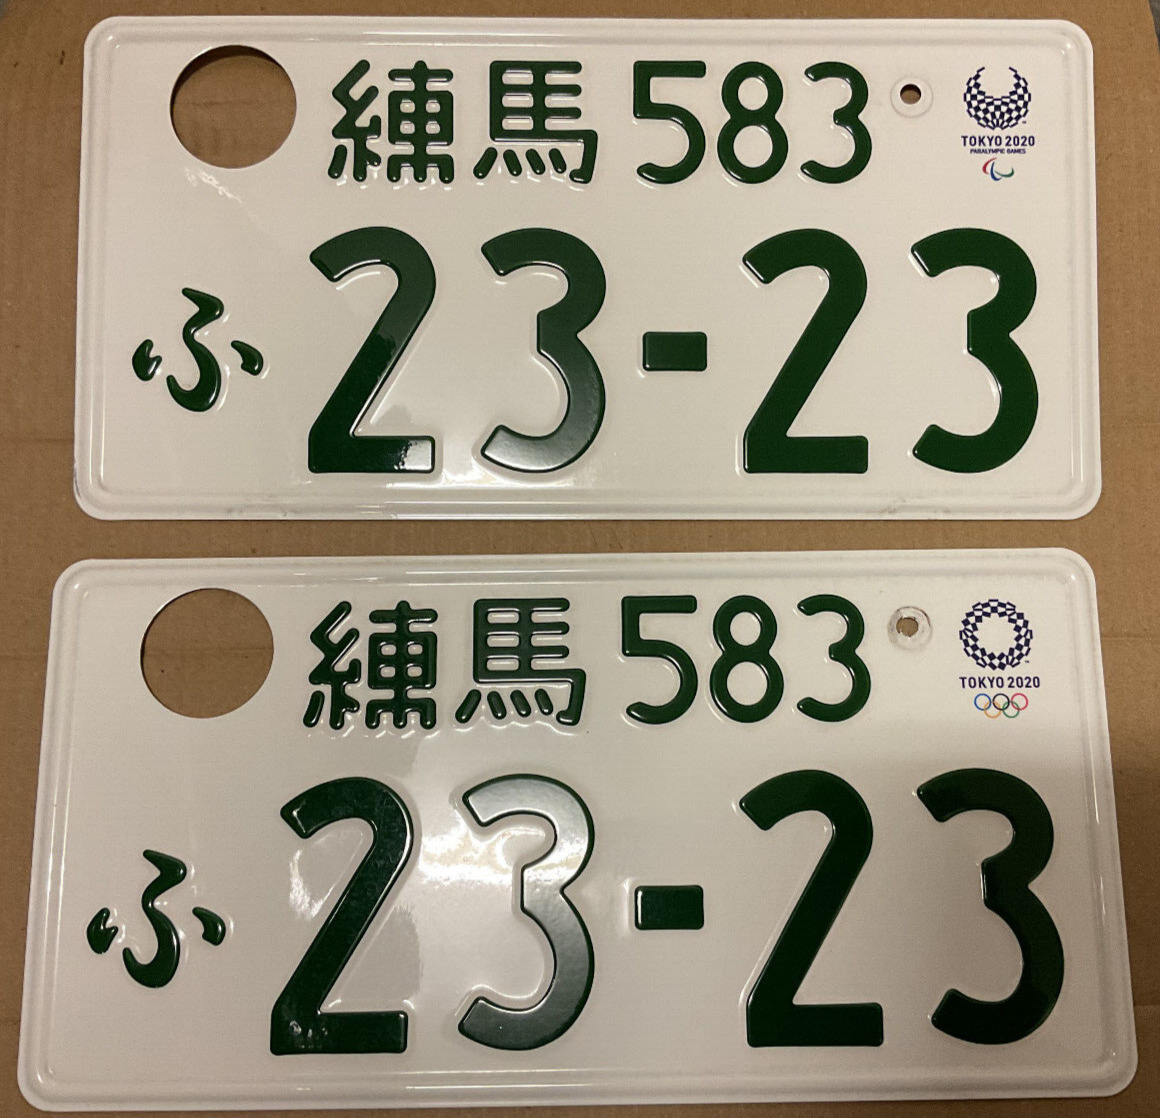 Genuine Japan license plate Nerima TOKYO 2020 Olympic